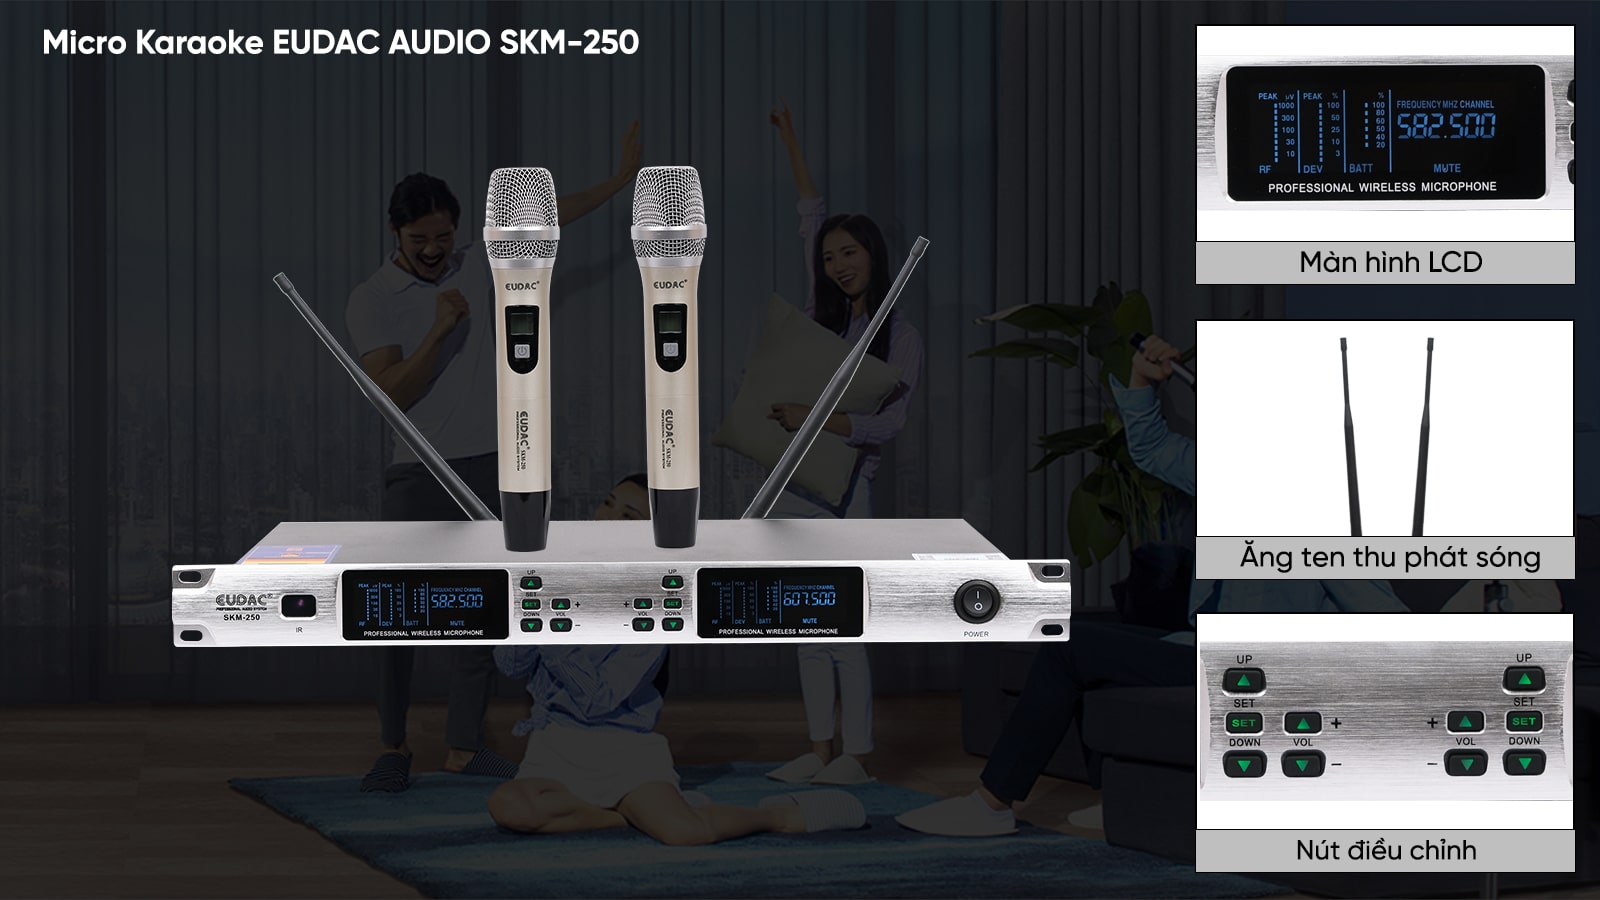 Micro Karaoke Eudac Audio SKM-250